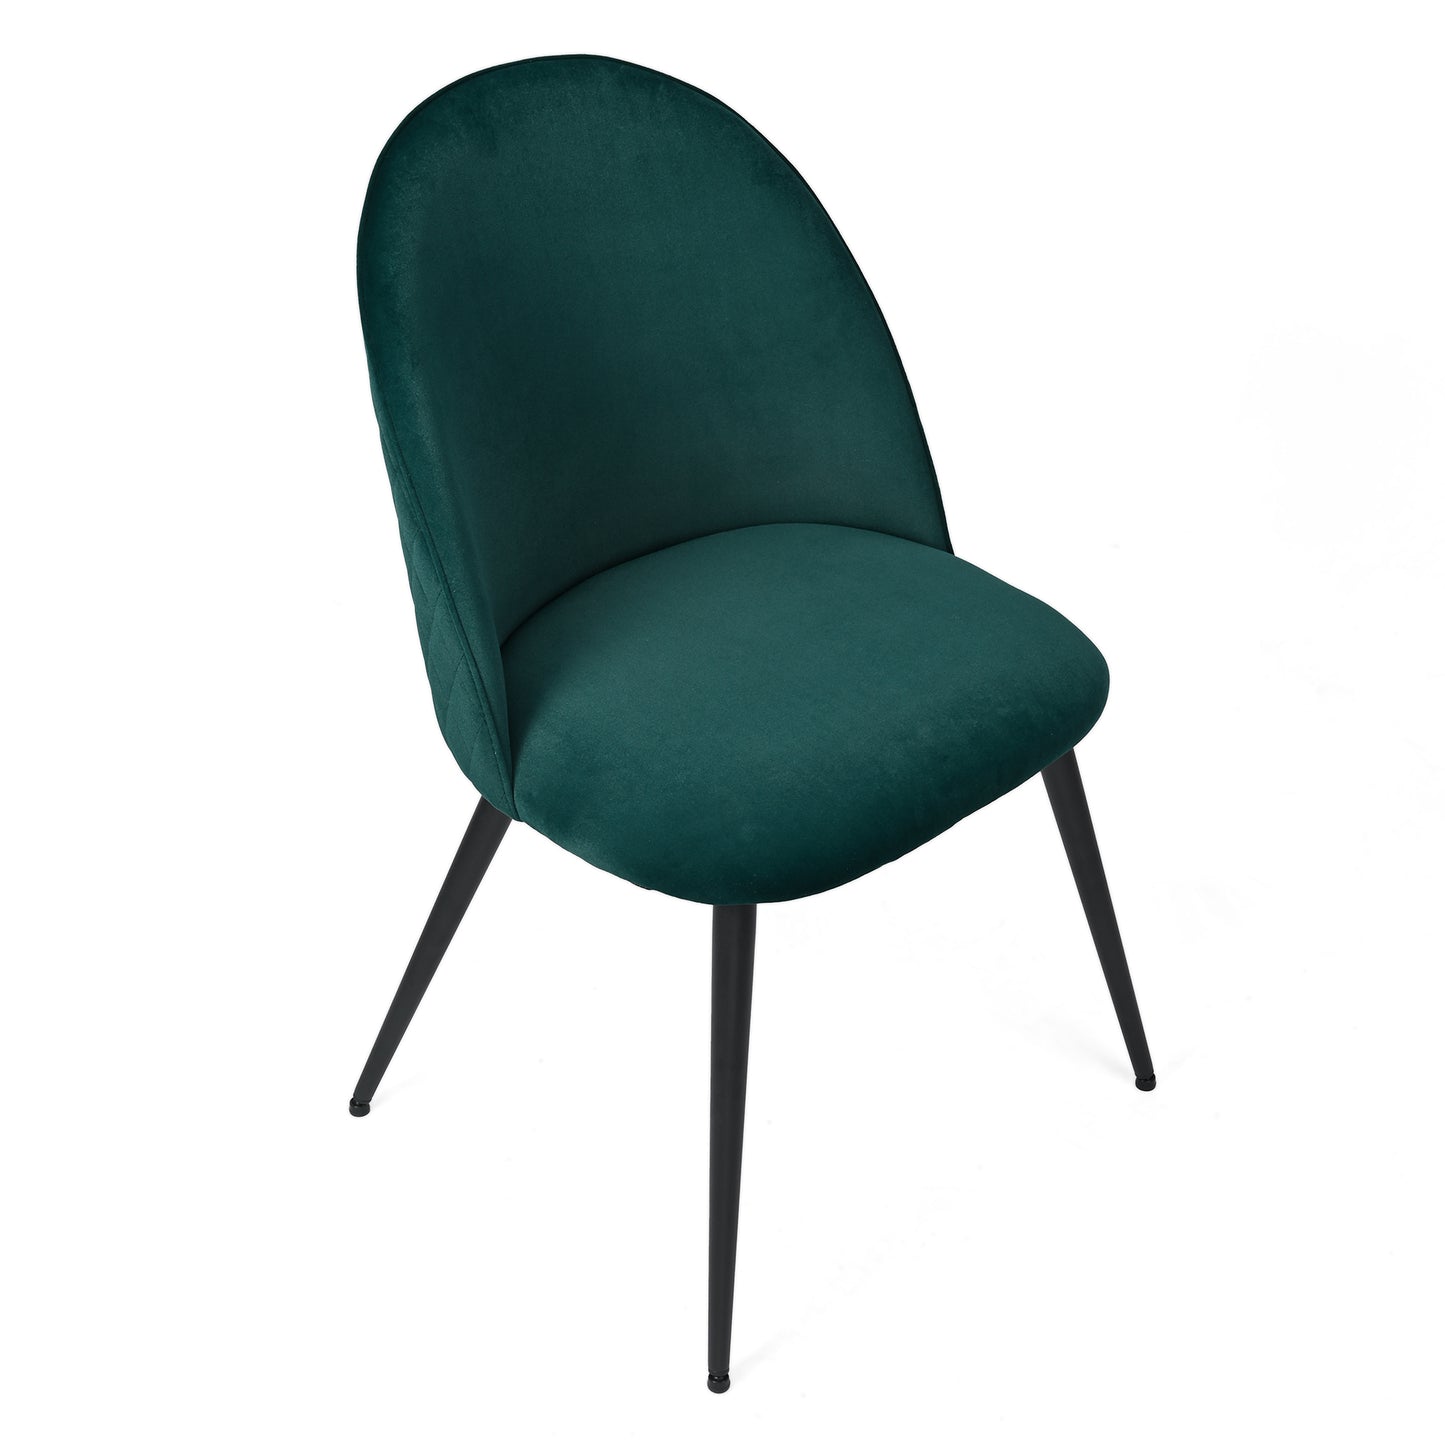 Dining Chair, Green Velvet, Metal Black legs, Set of 2 Side Chairs